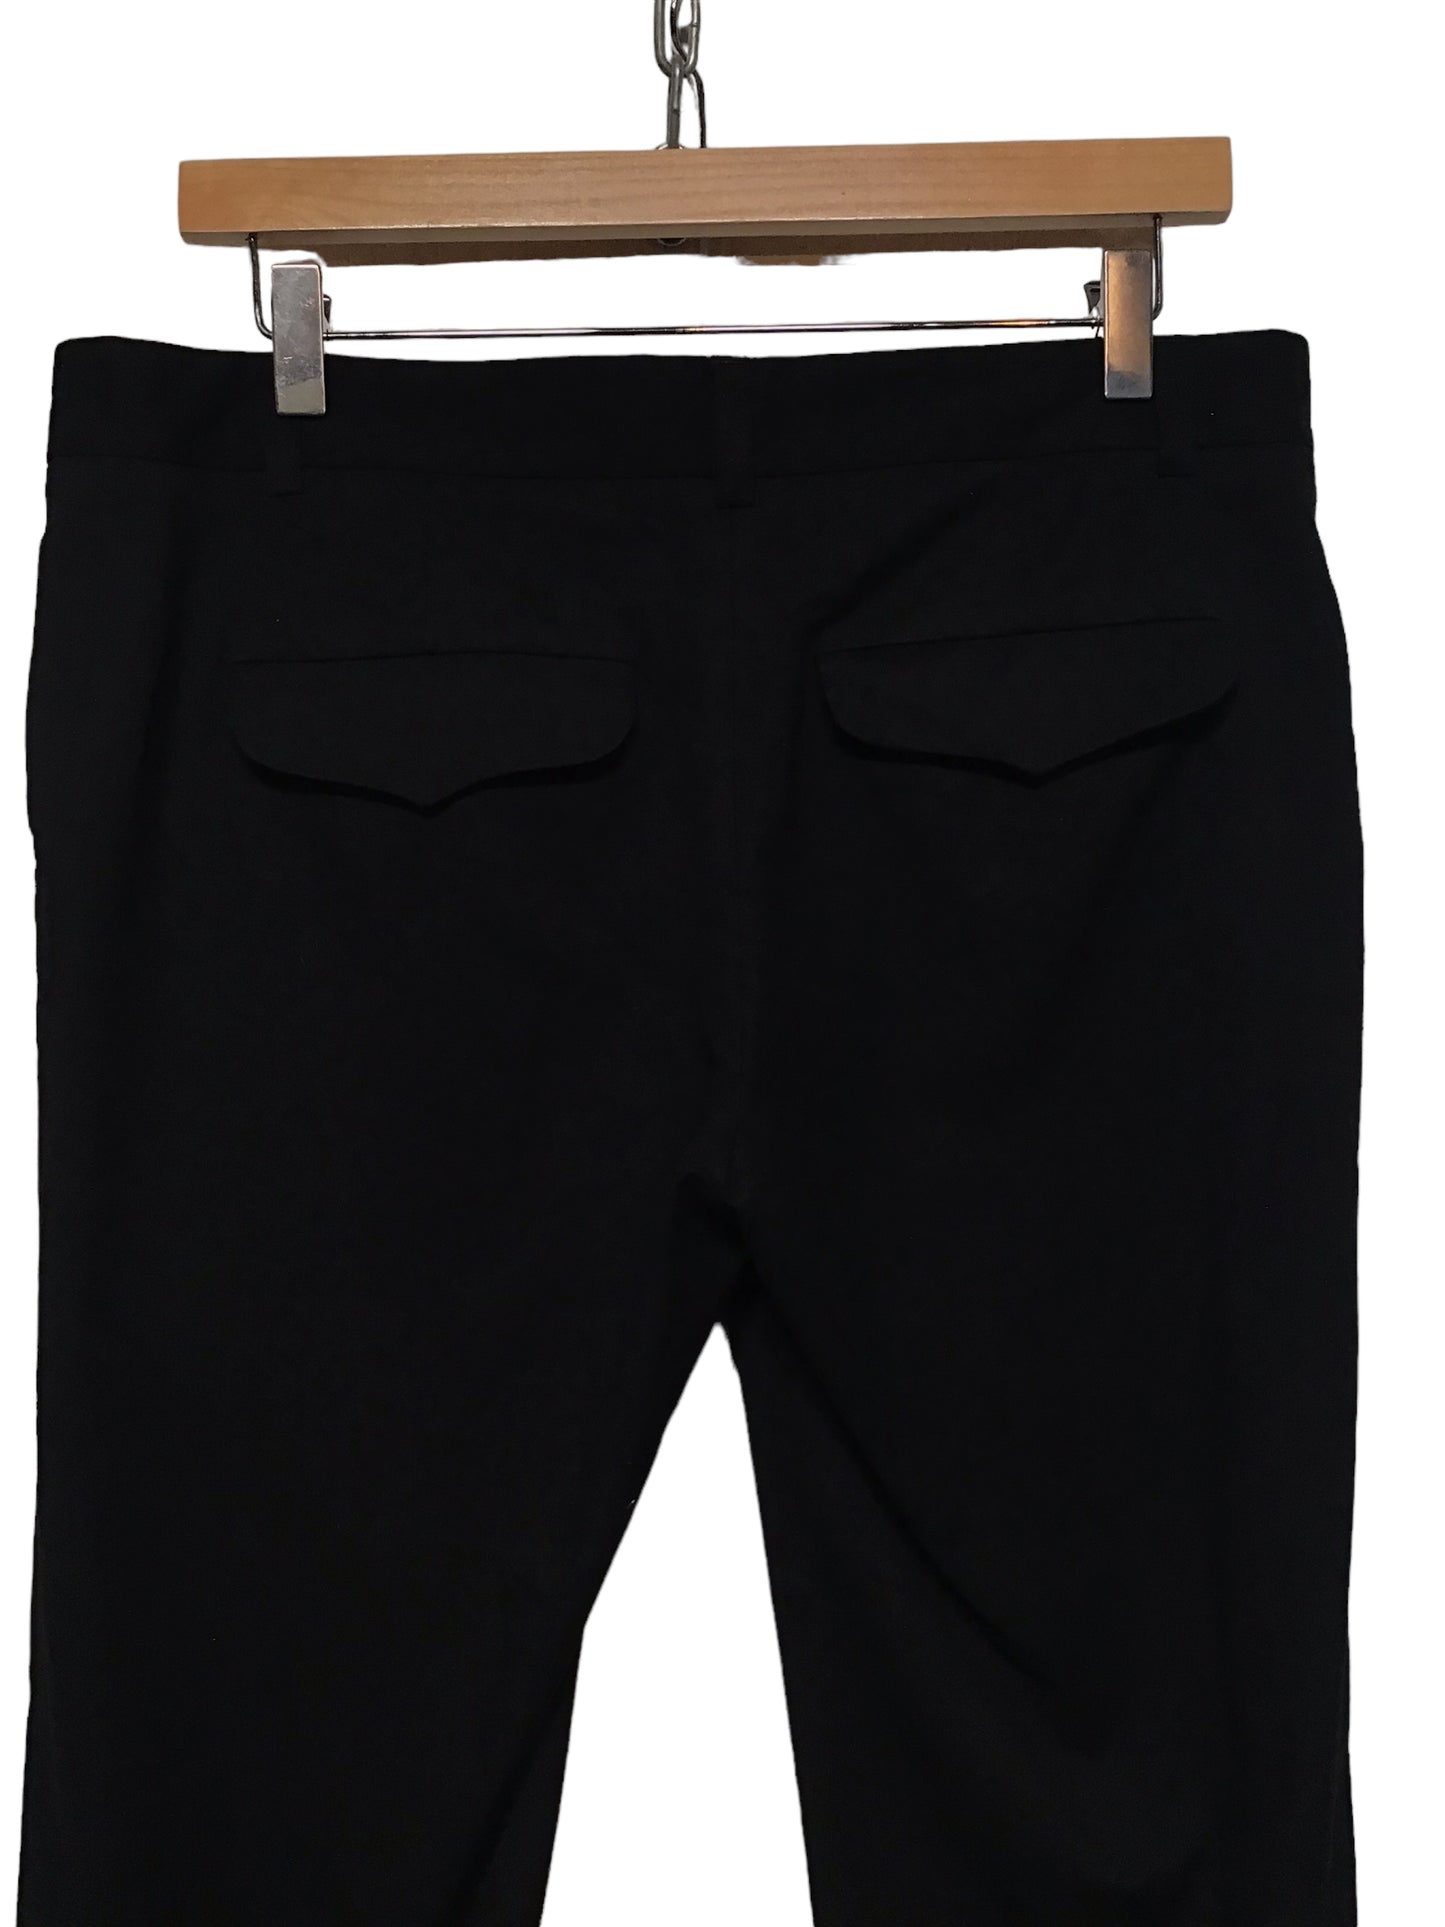 Kookai Suit Trousers (Size L)